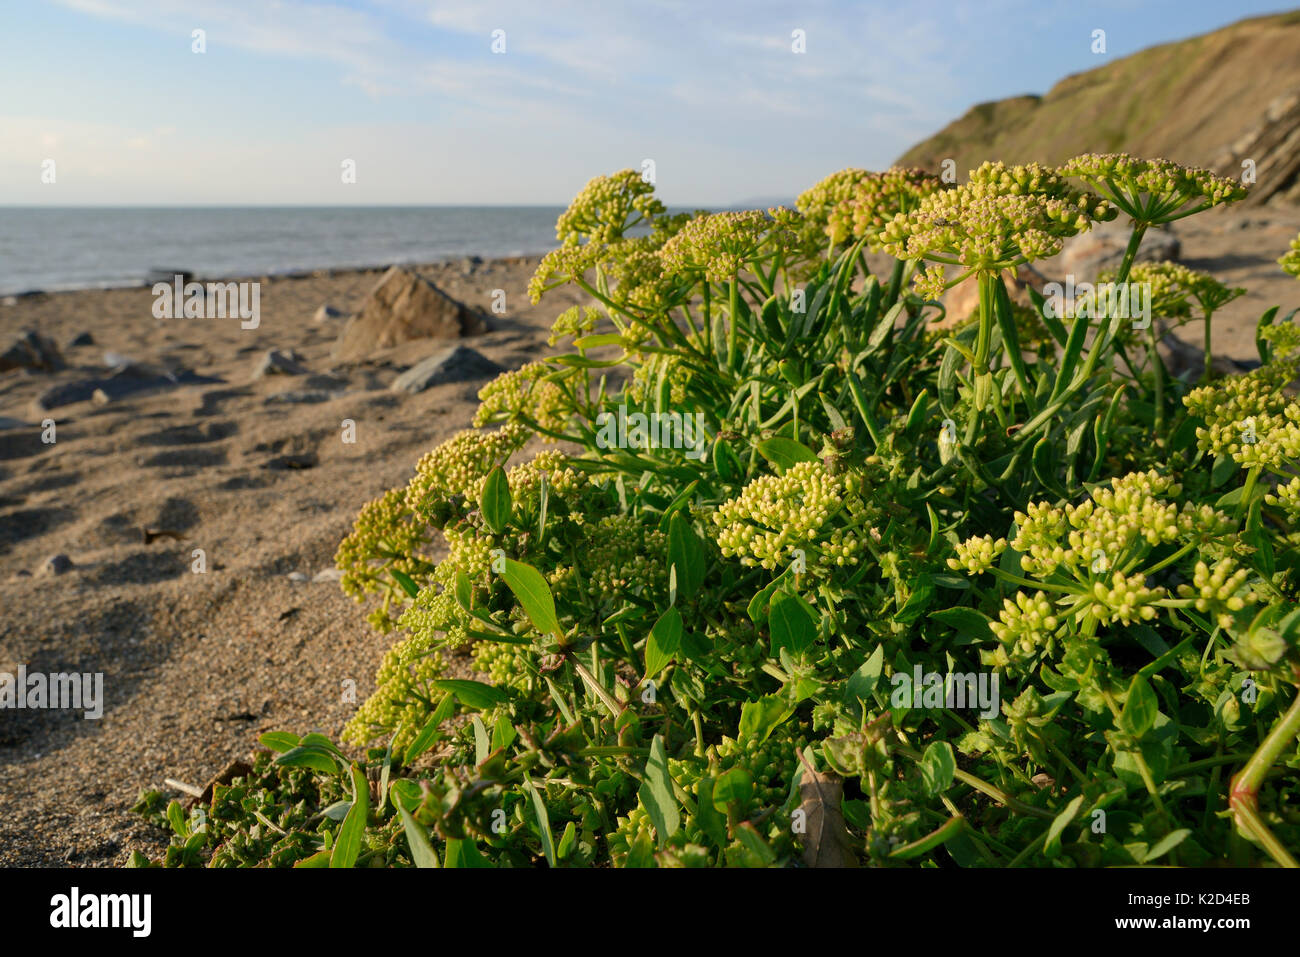 Rock samphire / Sea fennel (Crithmum maritimum) flowering high on a sandy beach, near Bude, Cornwall, UK, September. Stock Photo